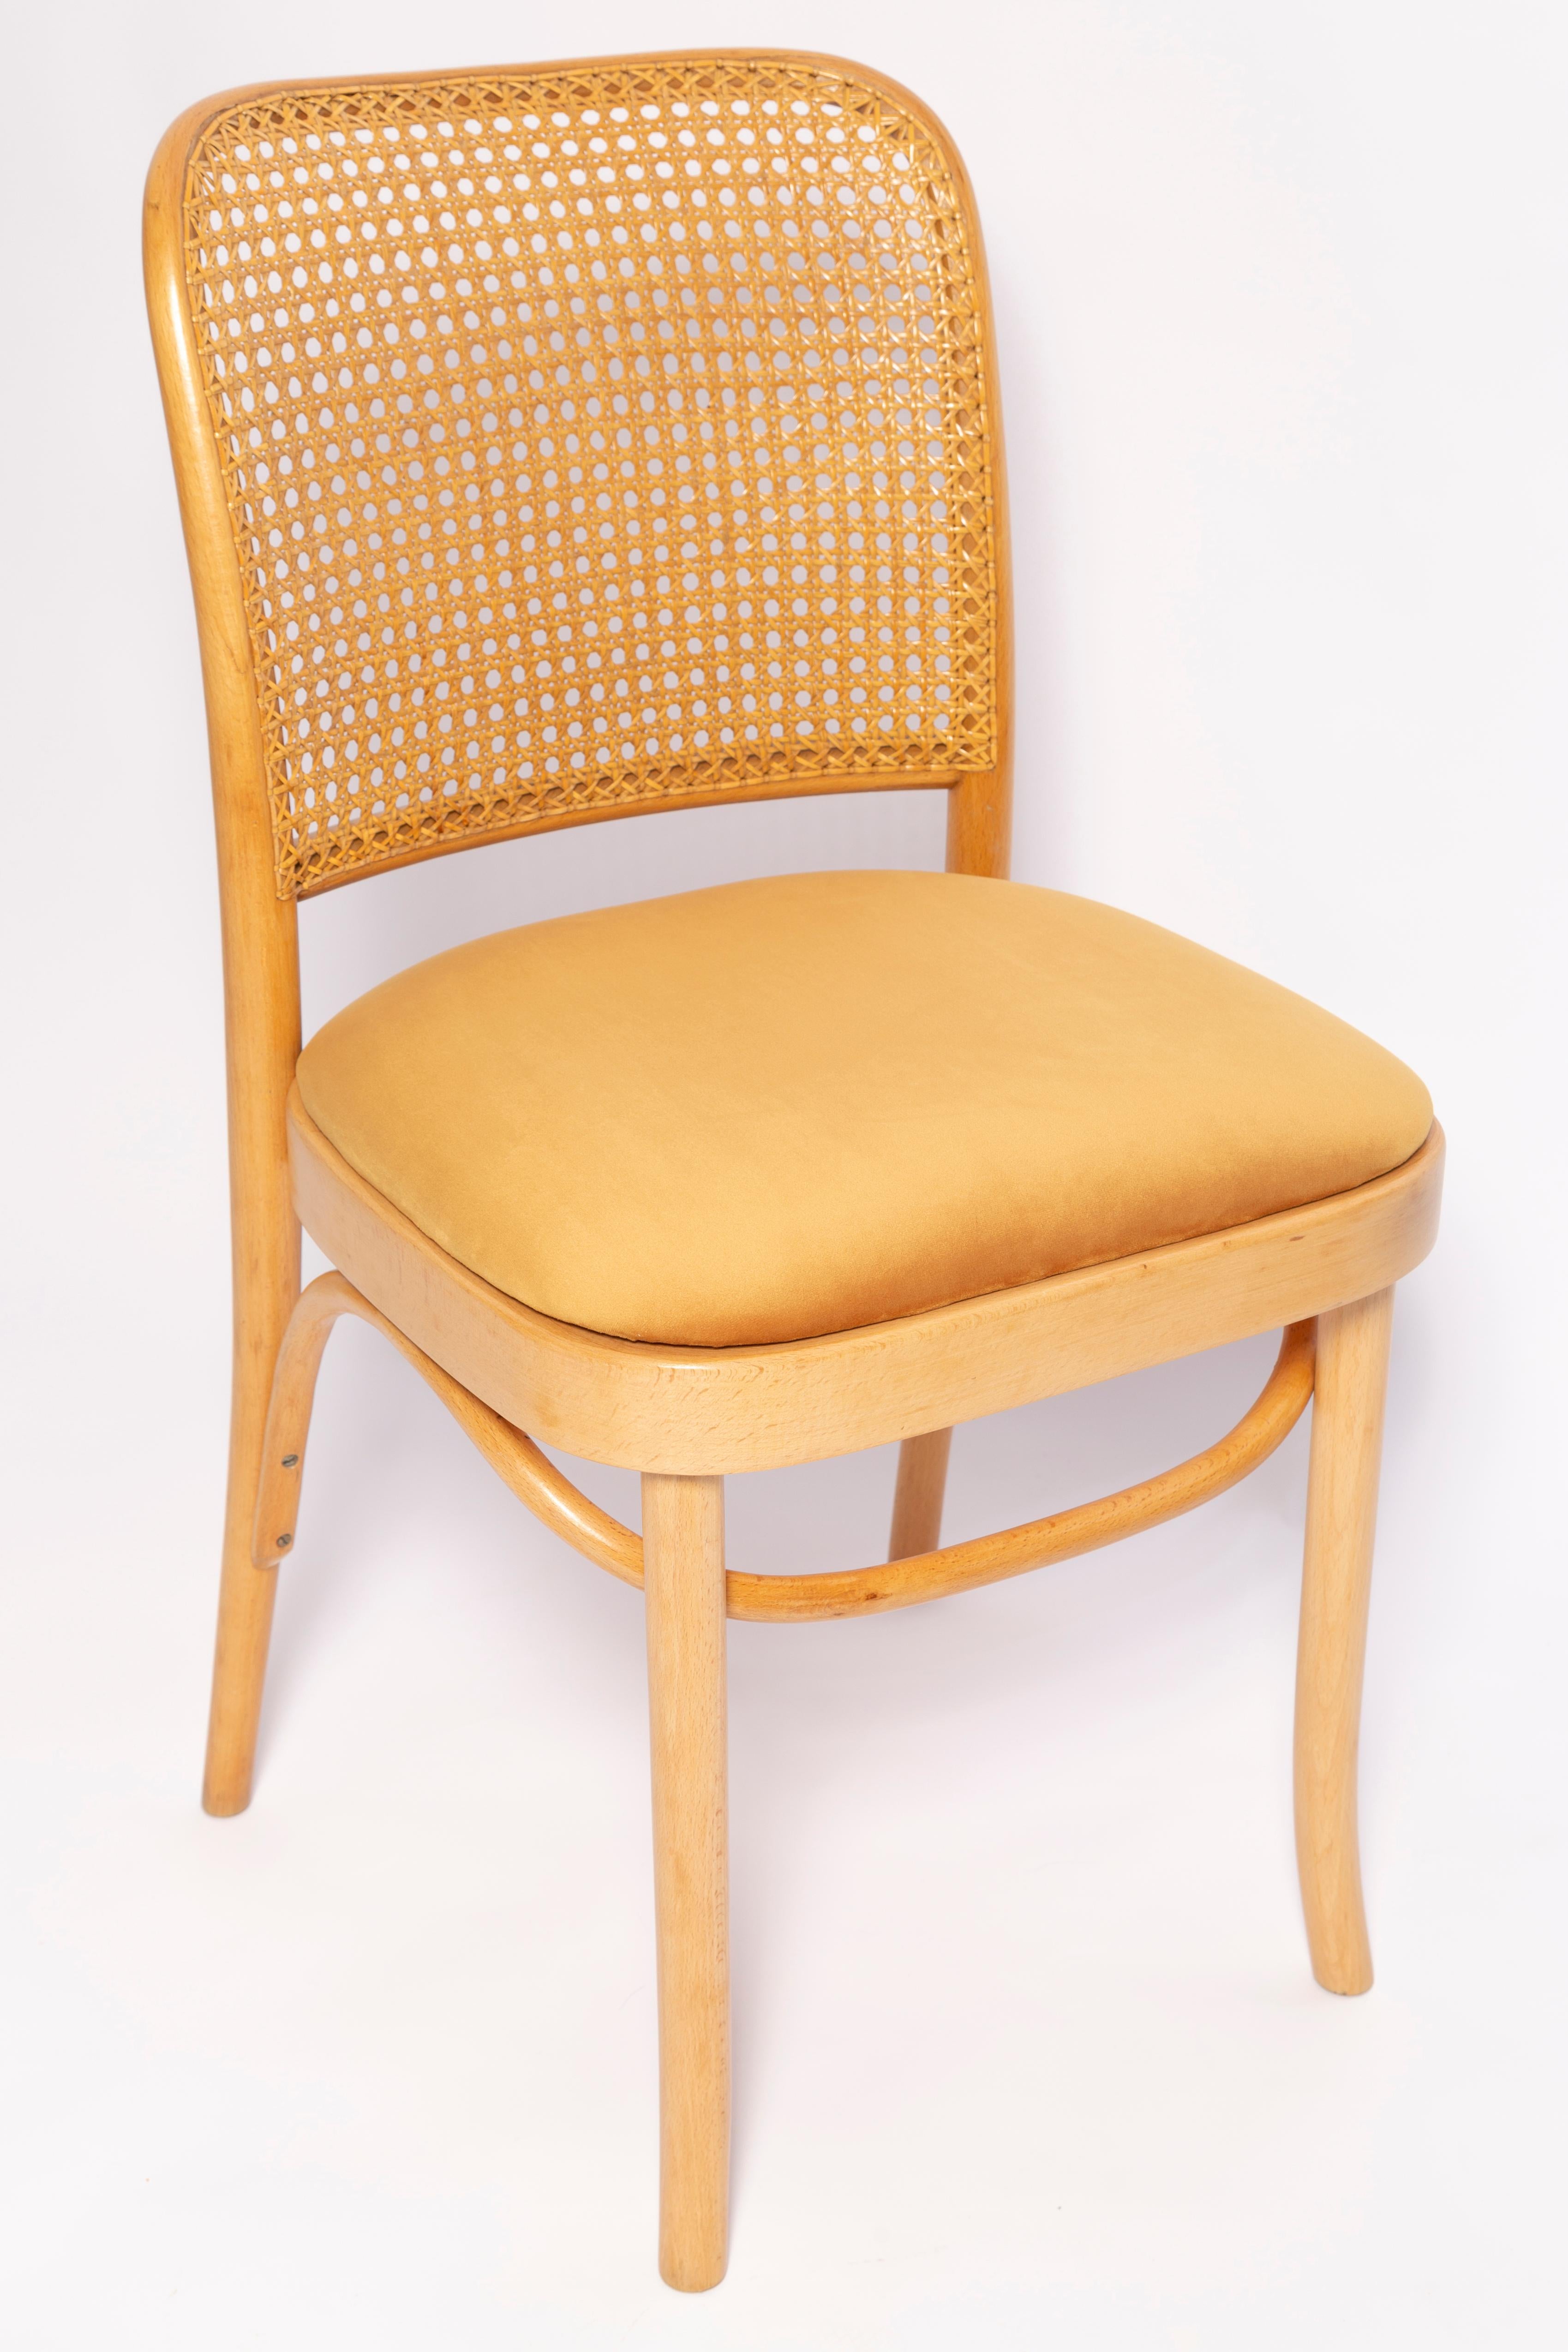 Mid-Century Modern Mid-Century Yellow Velvet Thonet Wood Rattan Chair, Europe, 1960s For Sale